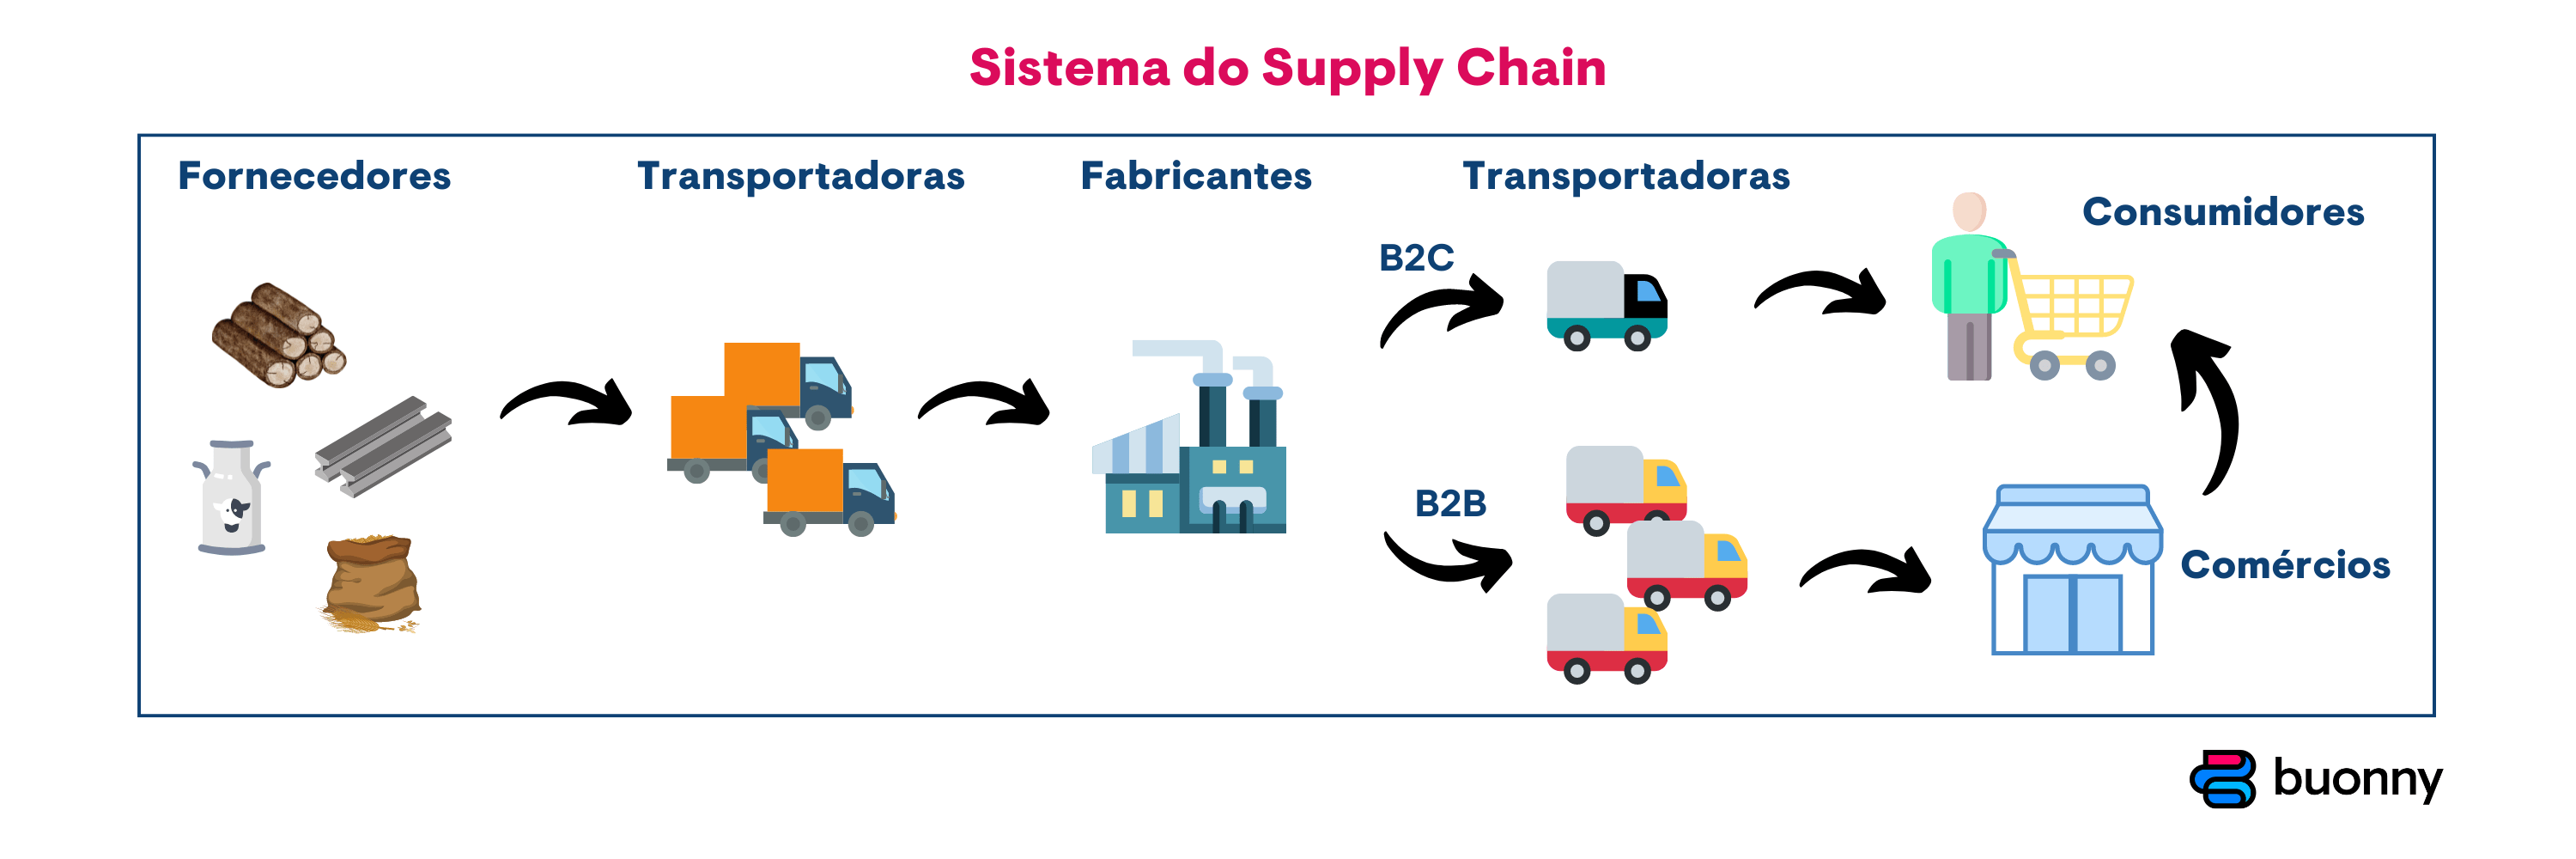 Como funciona a cadeia de suprimentos - Supply Chain